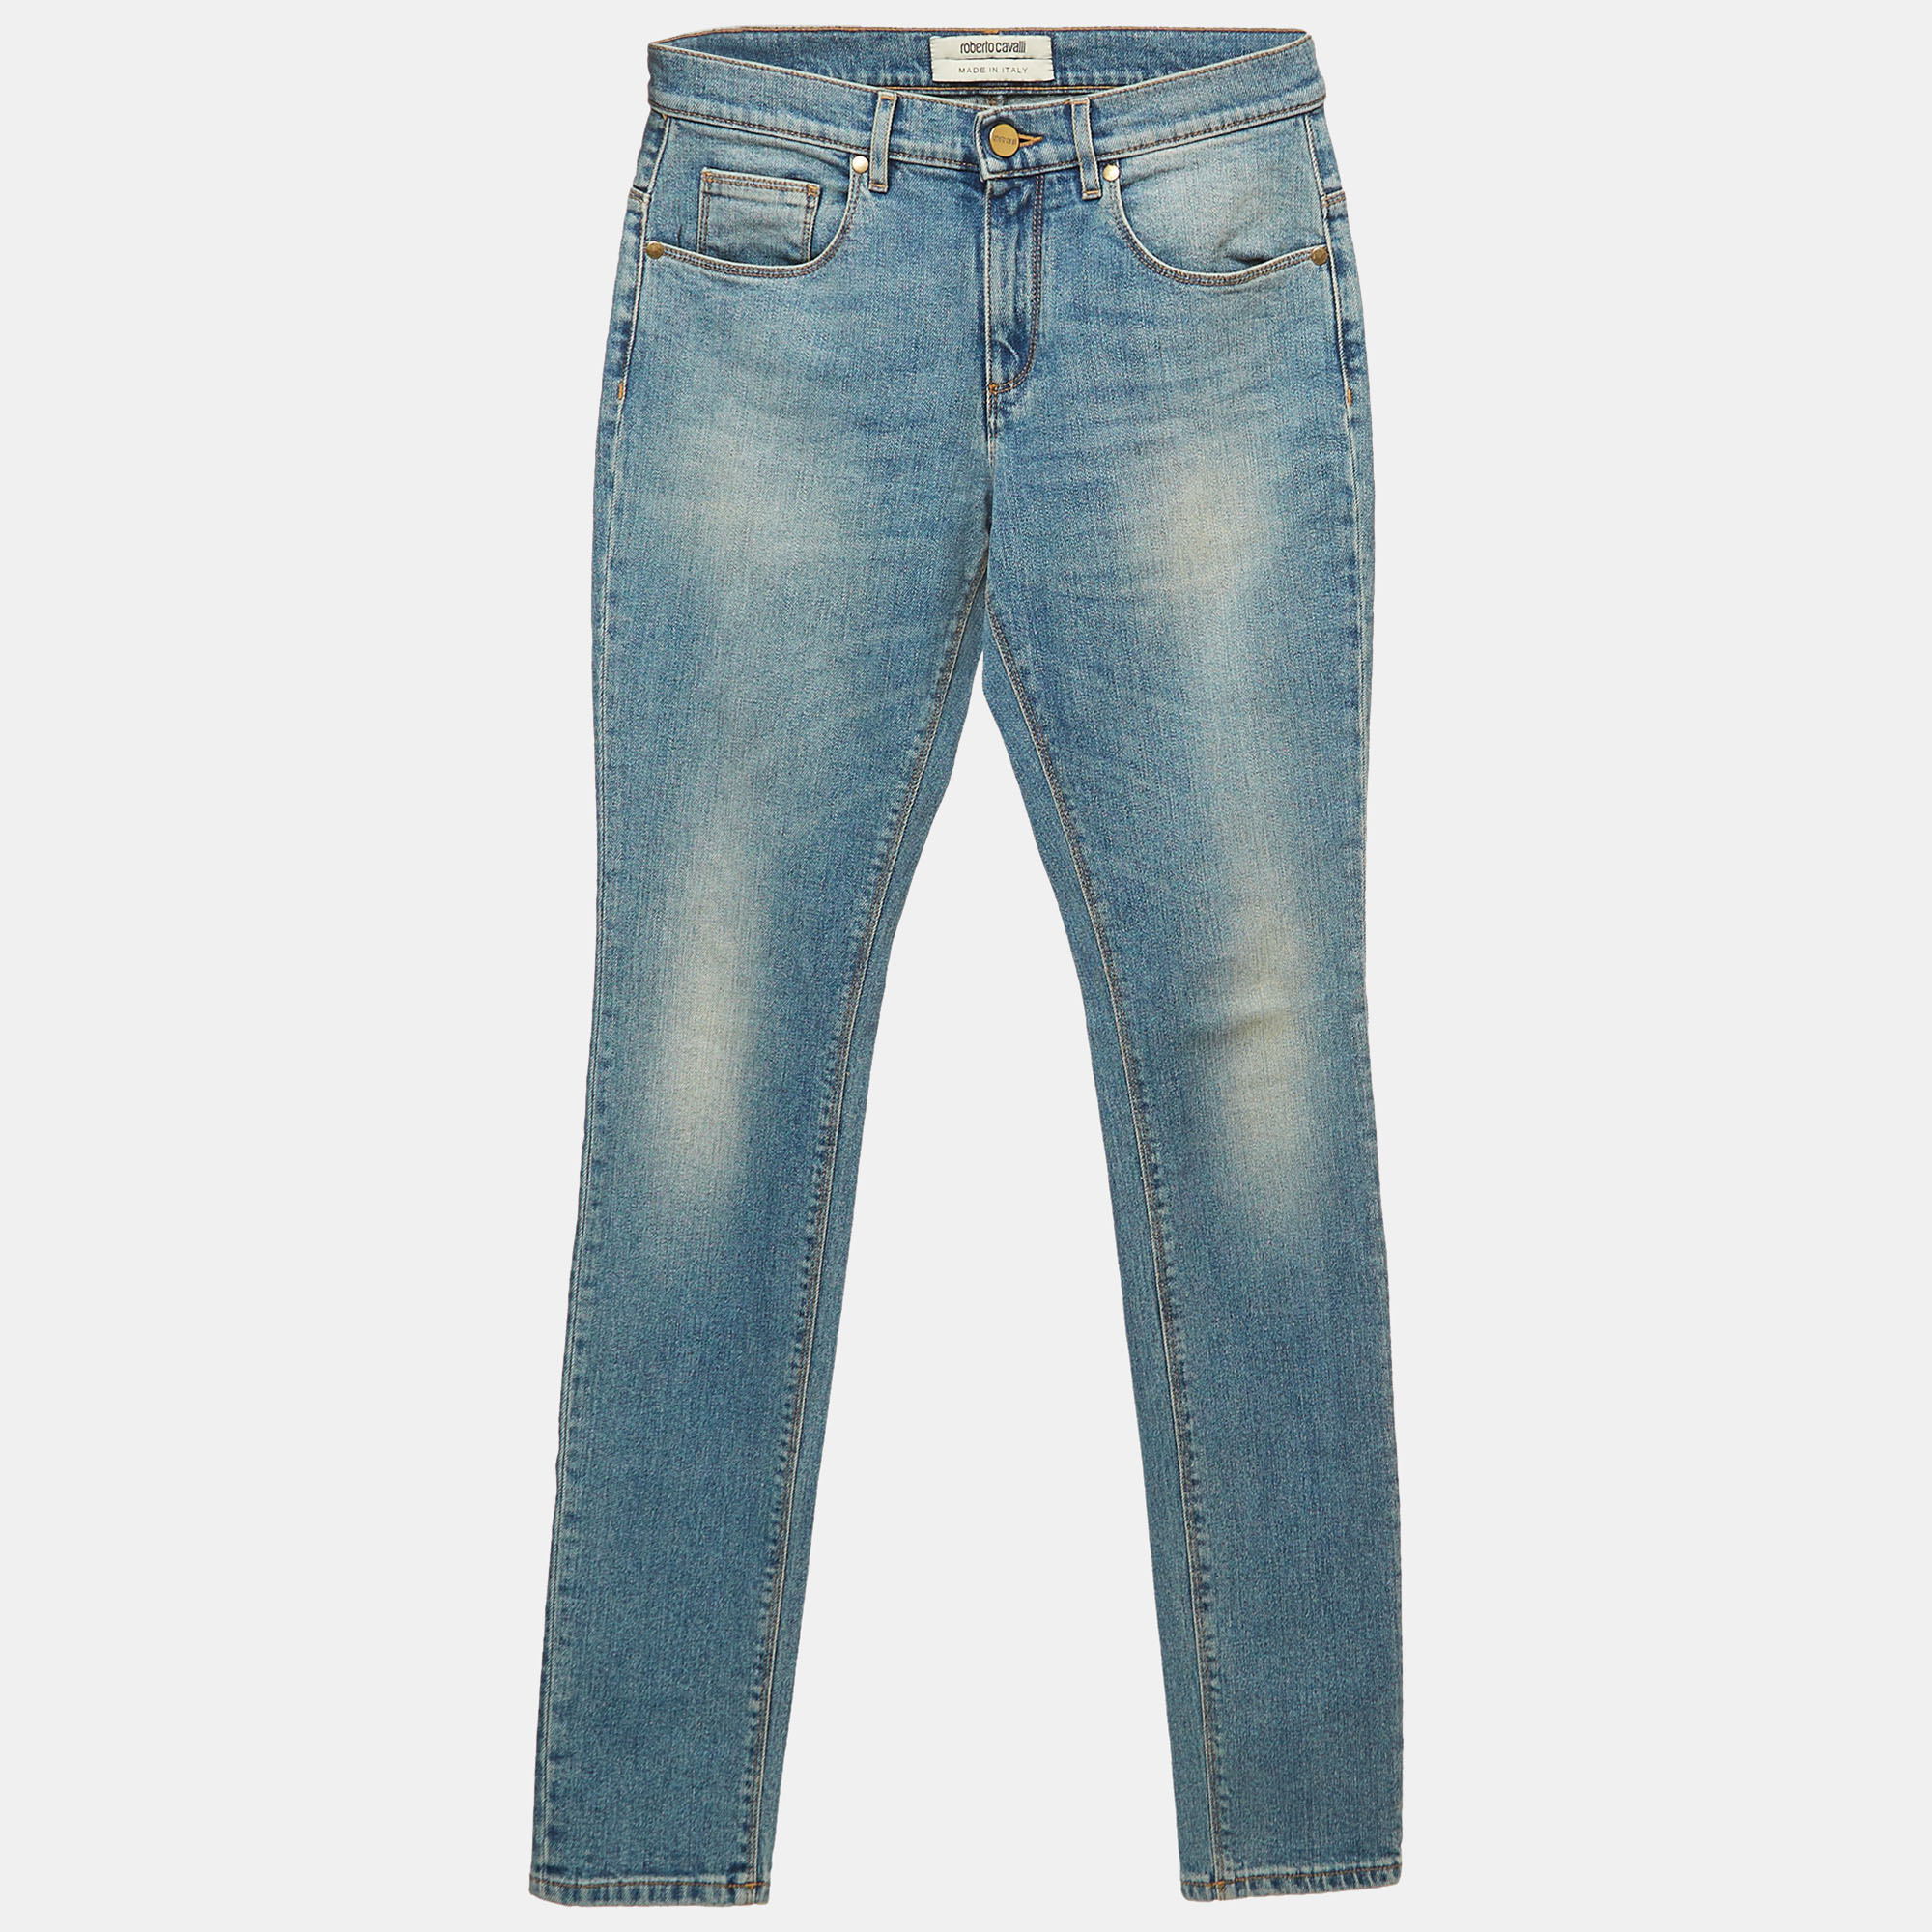 Roberto Cavalli Blue Washed Denim Skinny Jeans S Waist 26